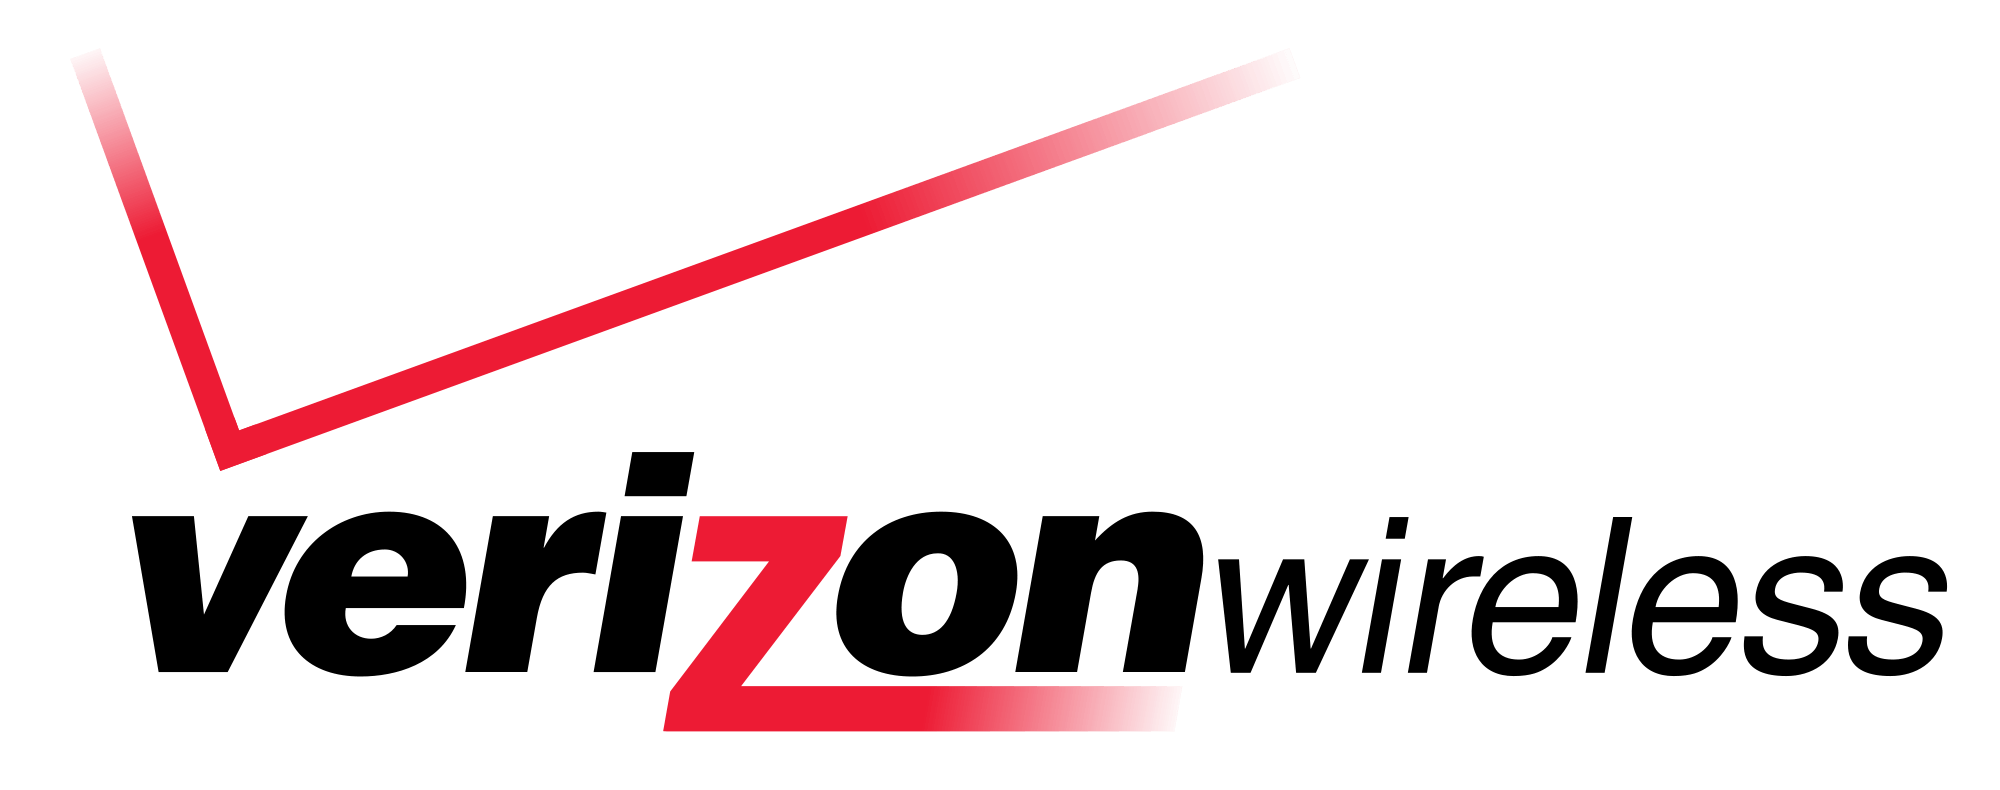 Google Verizon Logo - Verizon Wireless Logo.svg